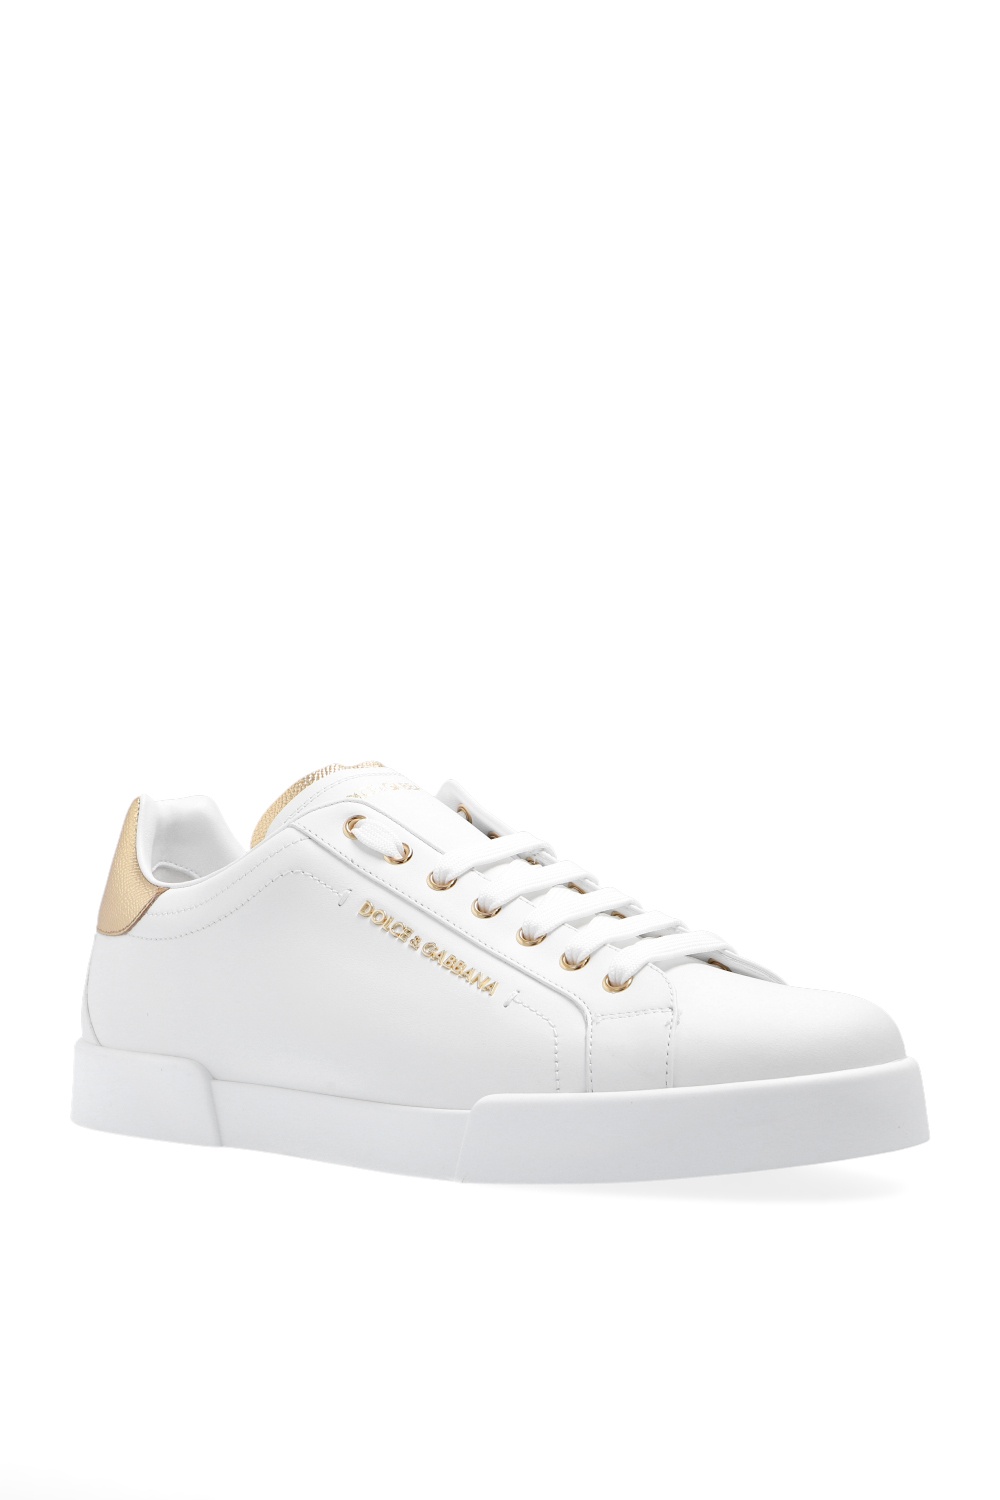 Dolce & Gabbana graphic-print silk shirt White ‘Portofino’ leather sneakers